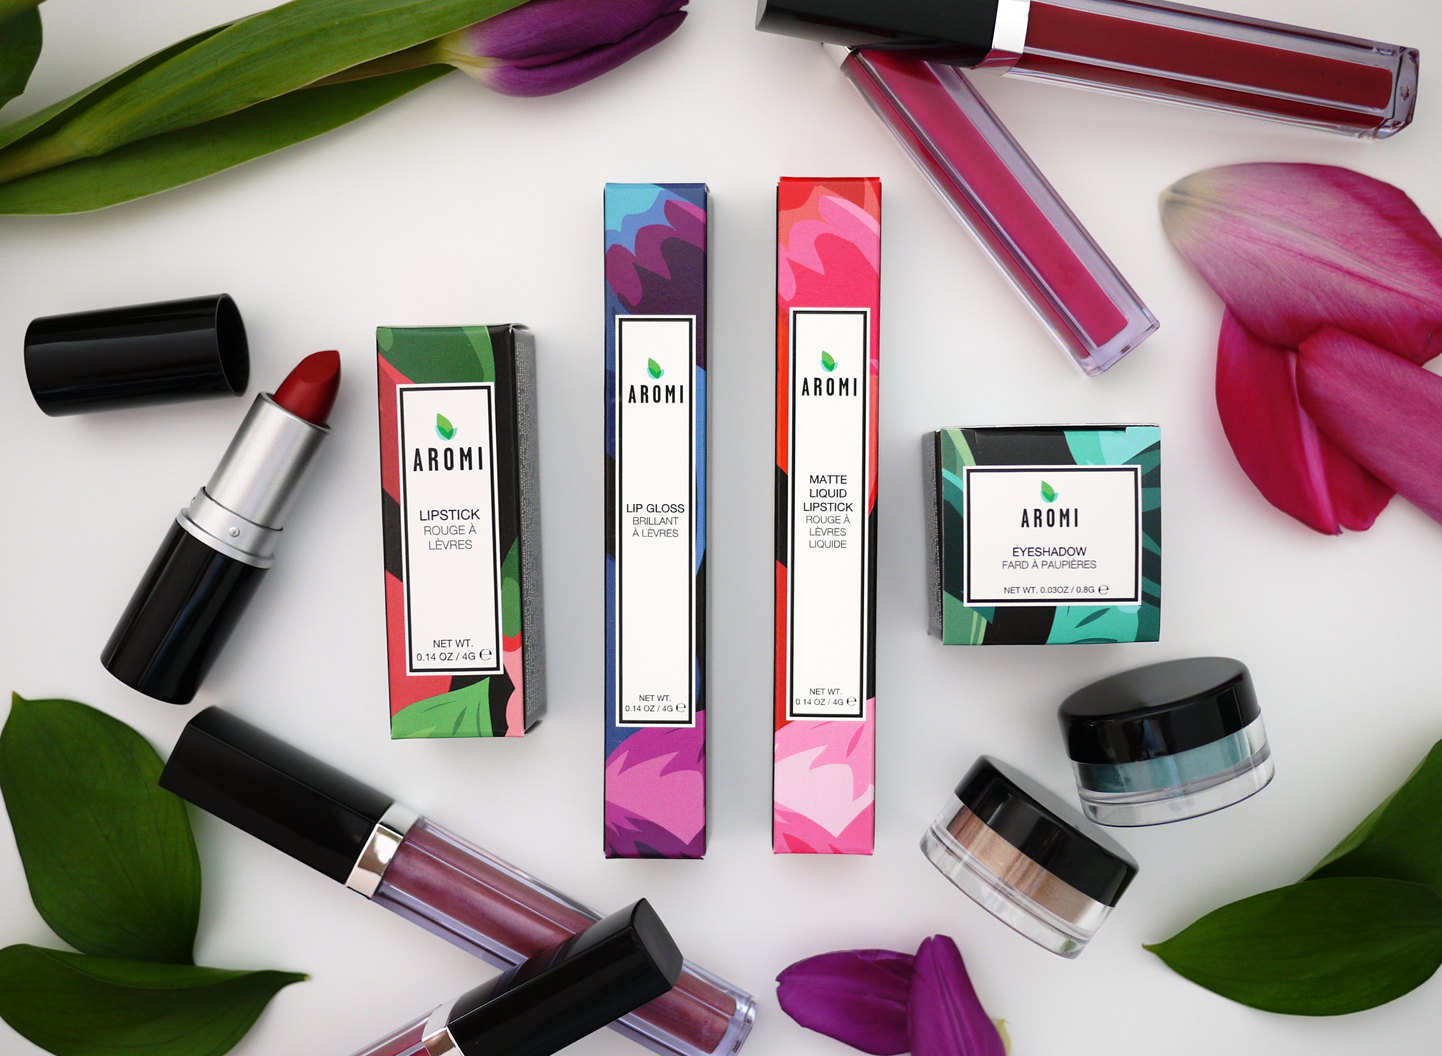 Aromi lipstick, lip gloss, glossy-to-matte liquid lipstick, and loose mineral eyeshadow